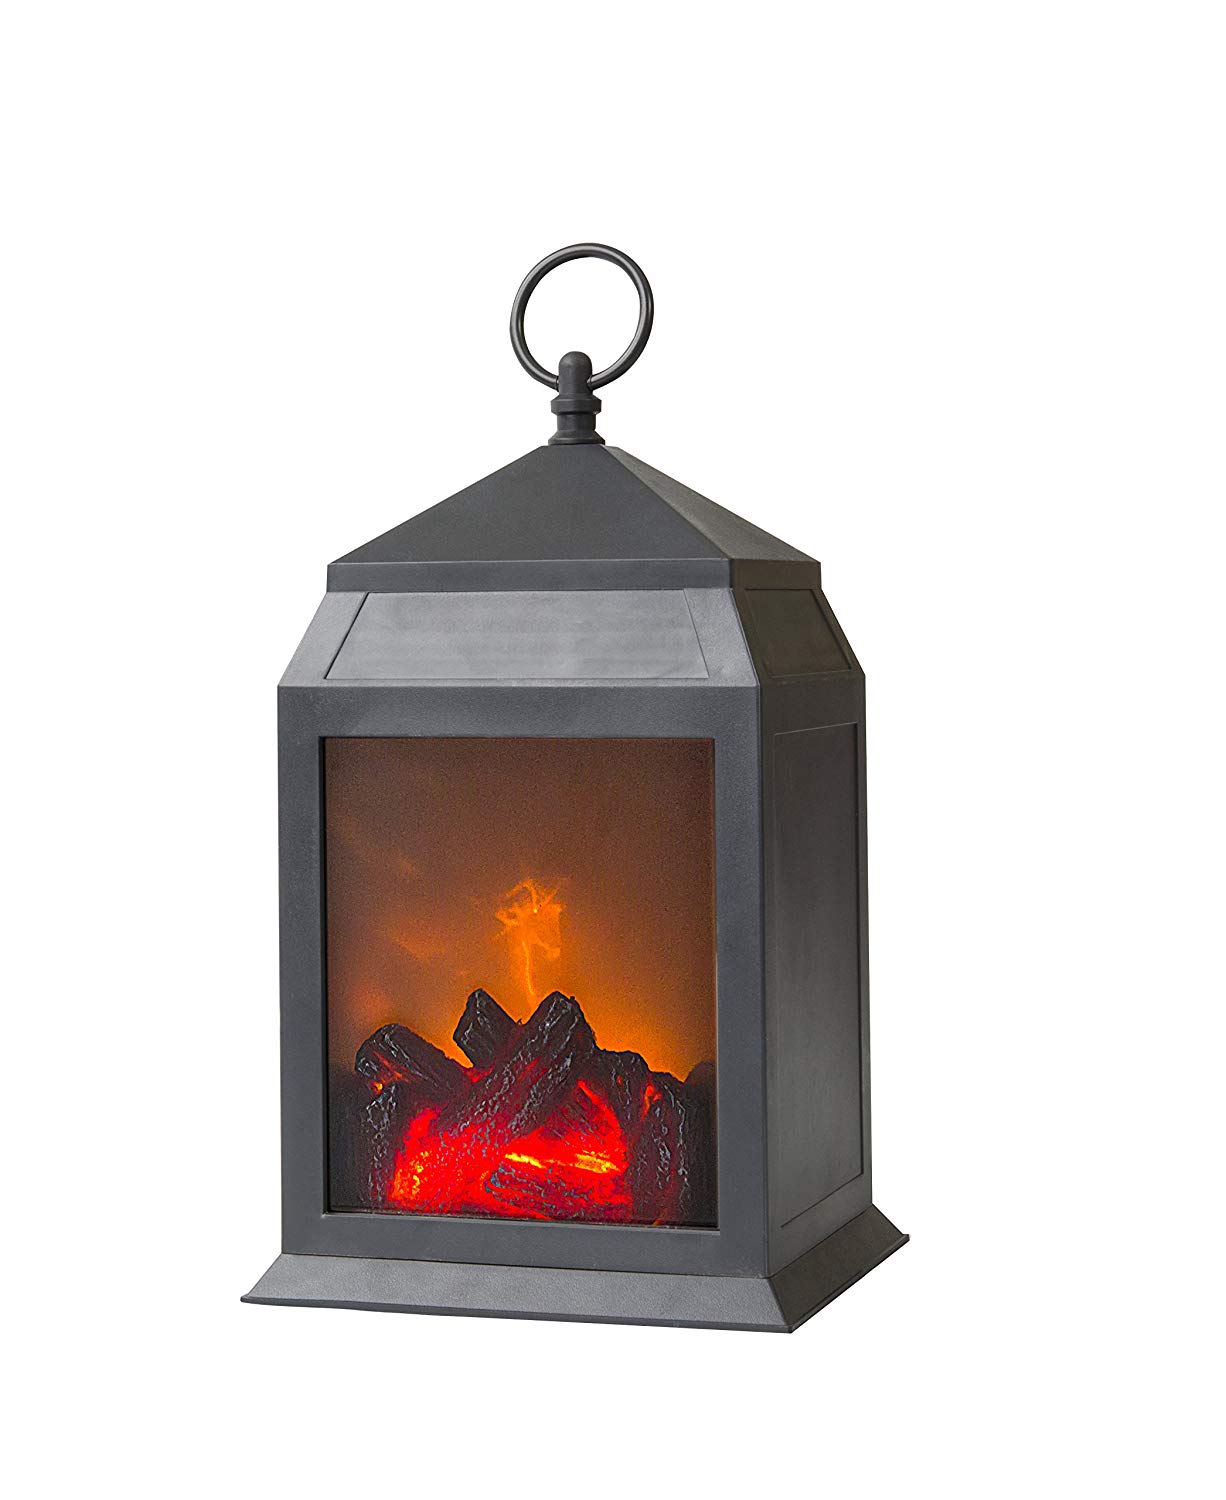 Decorative Fireplace Lantern - Black